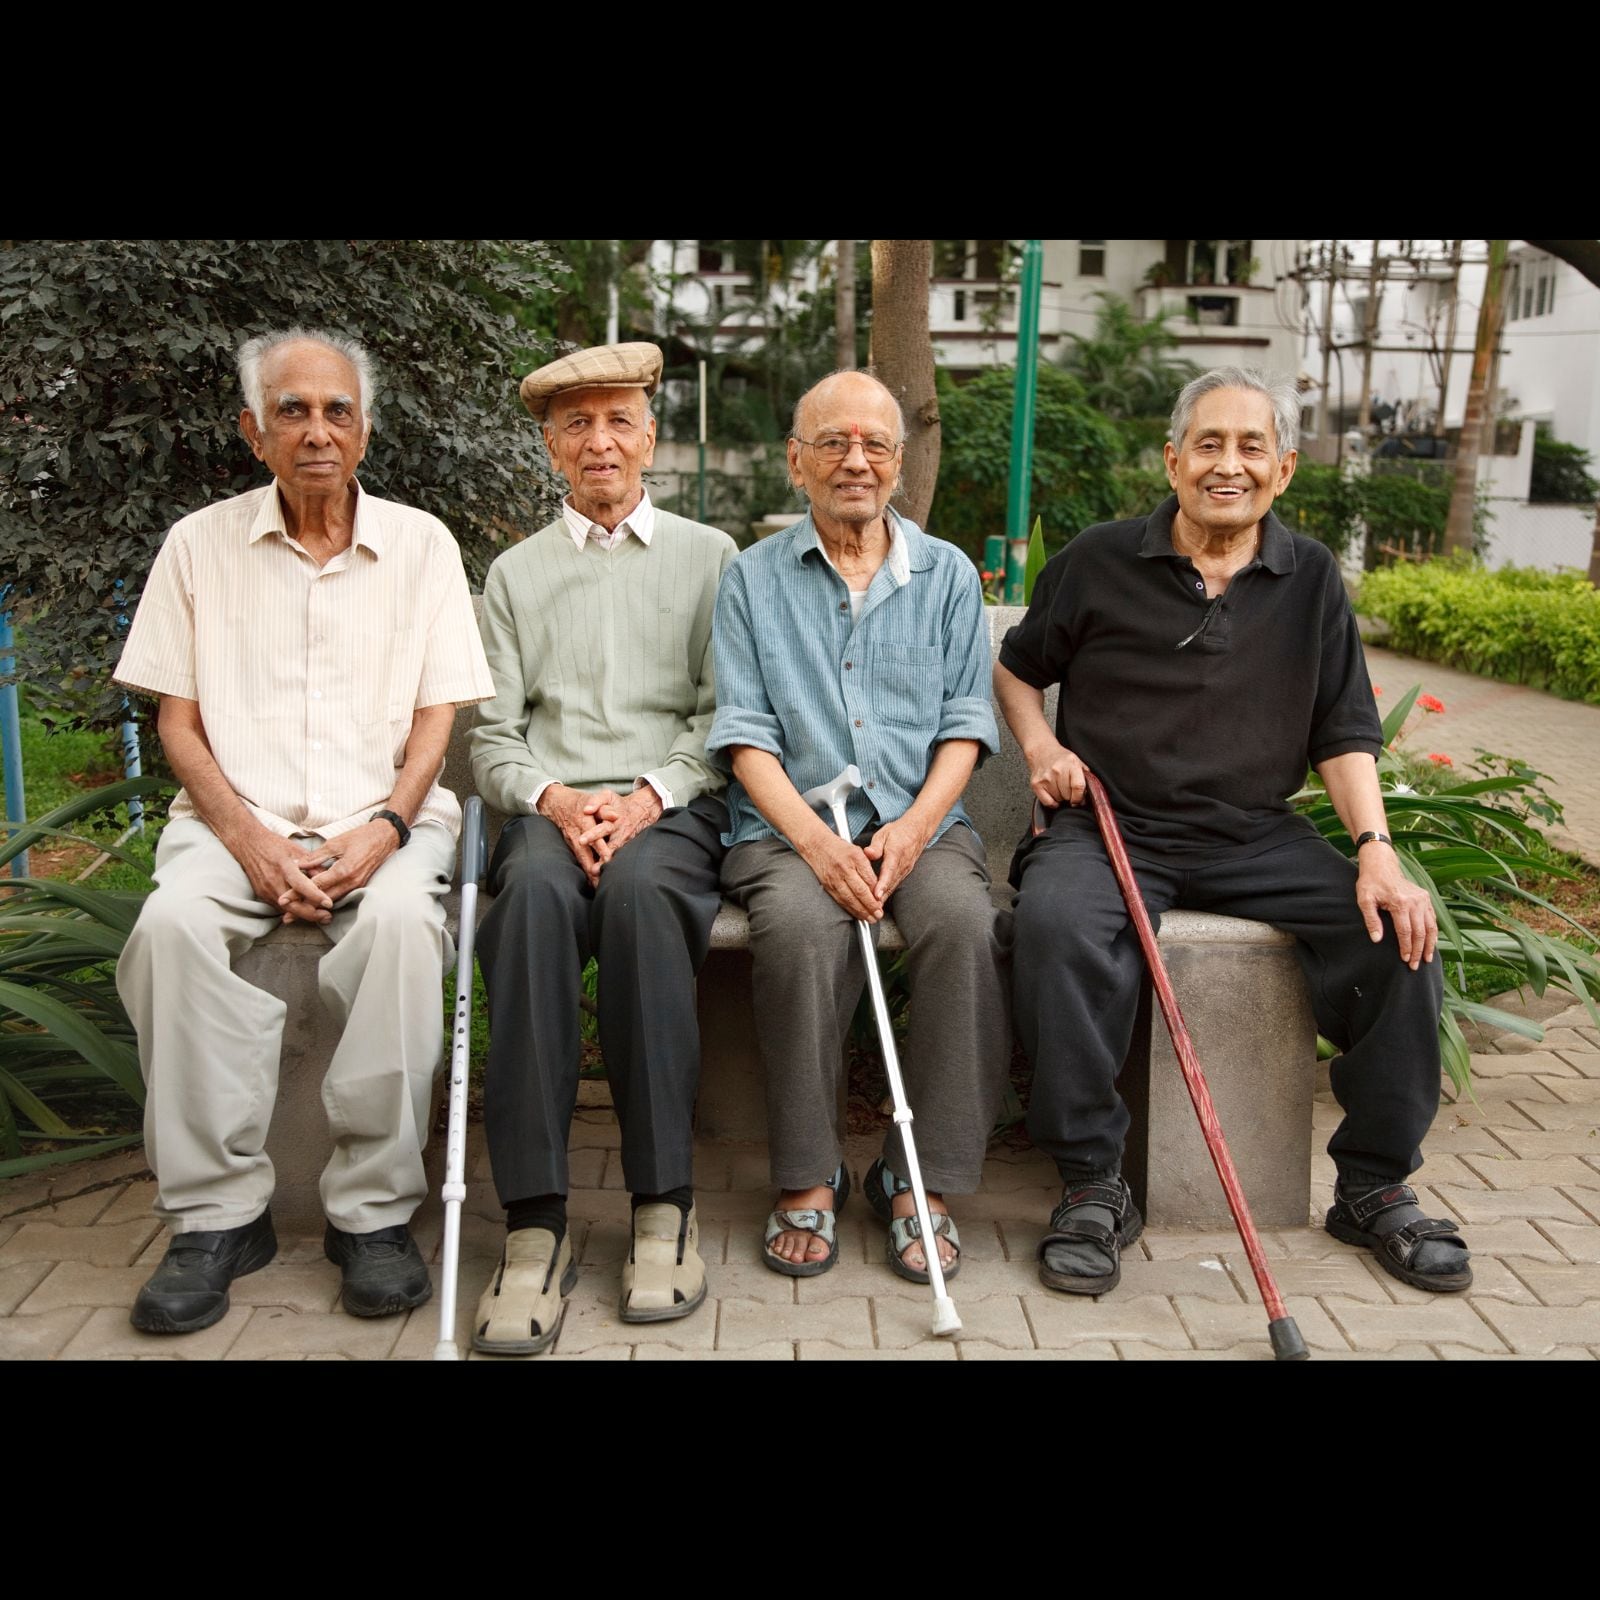 https://images.news18.com/ibnlive/uploads/2021/11/senior-citizens.jpg